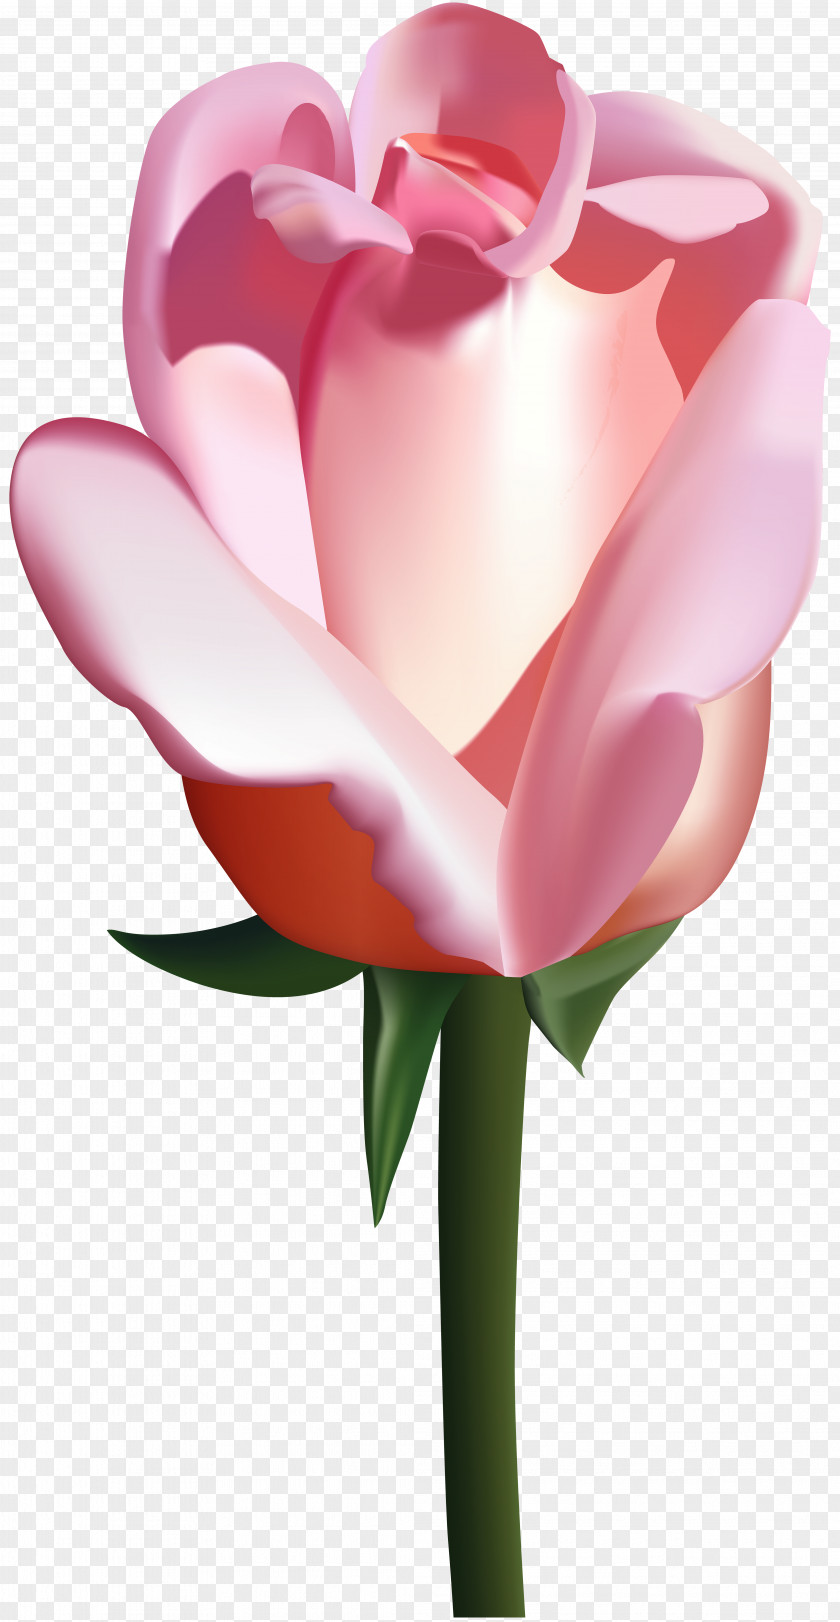 Vector Graphics Clip Art Garden Roses Image PNG